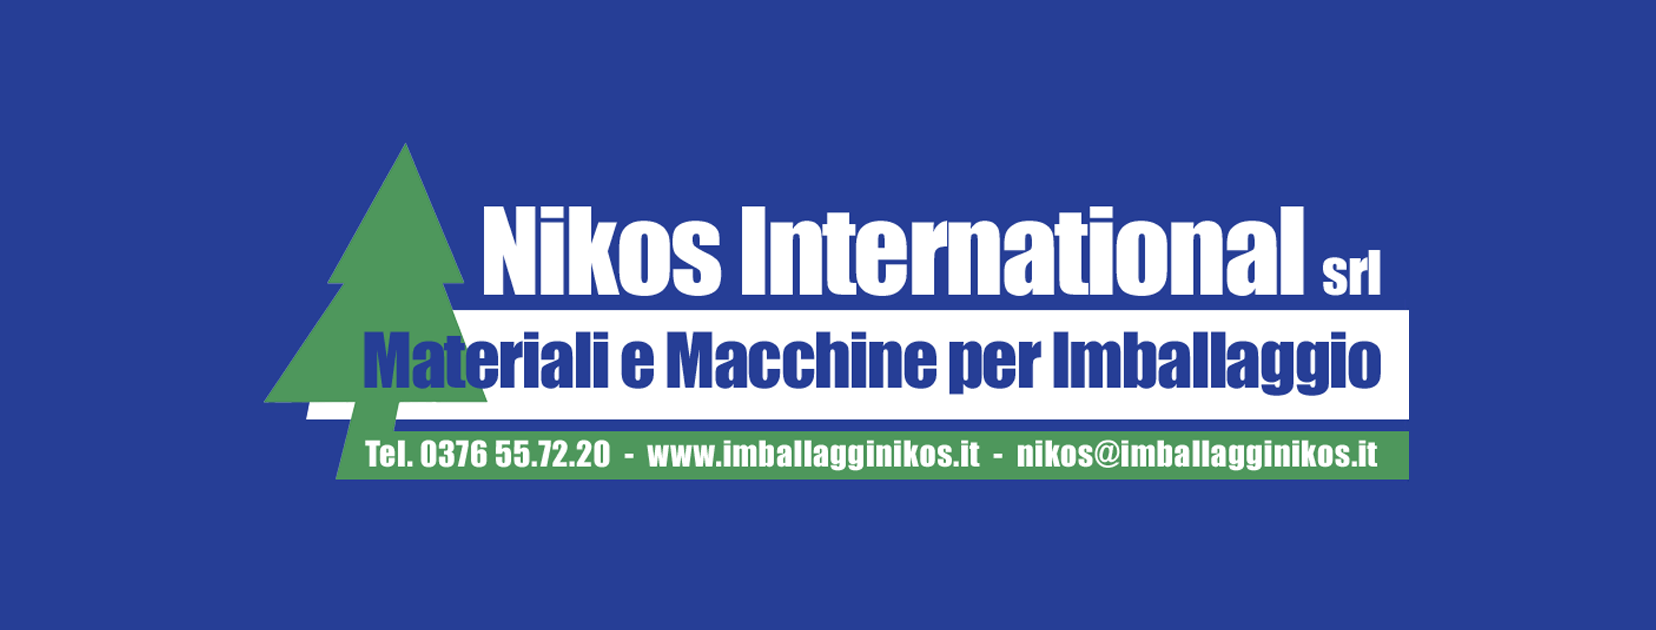 Nikos International